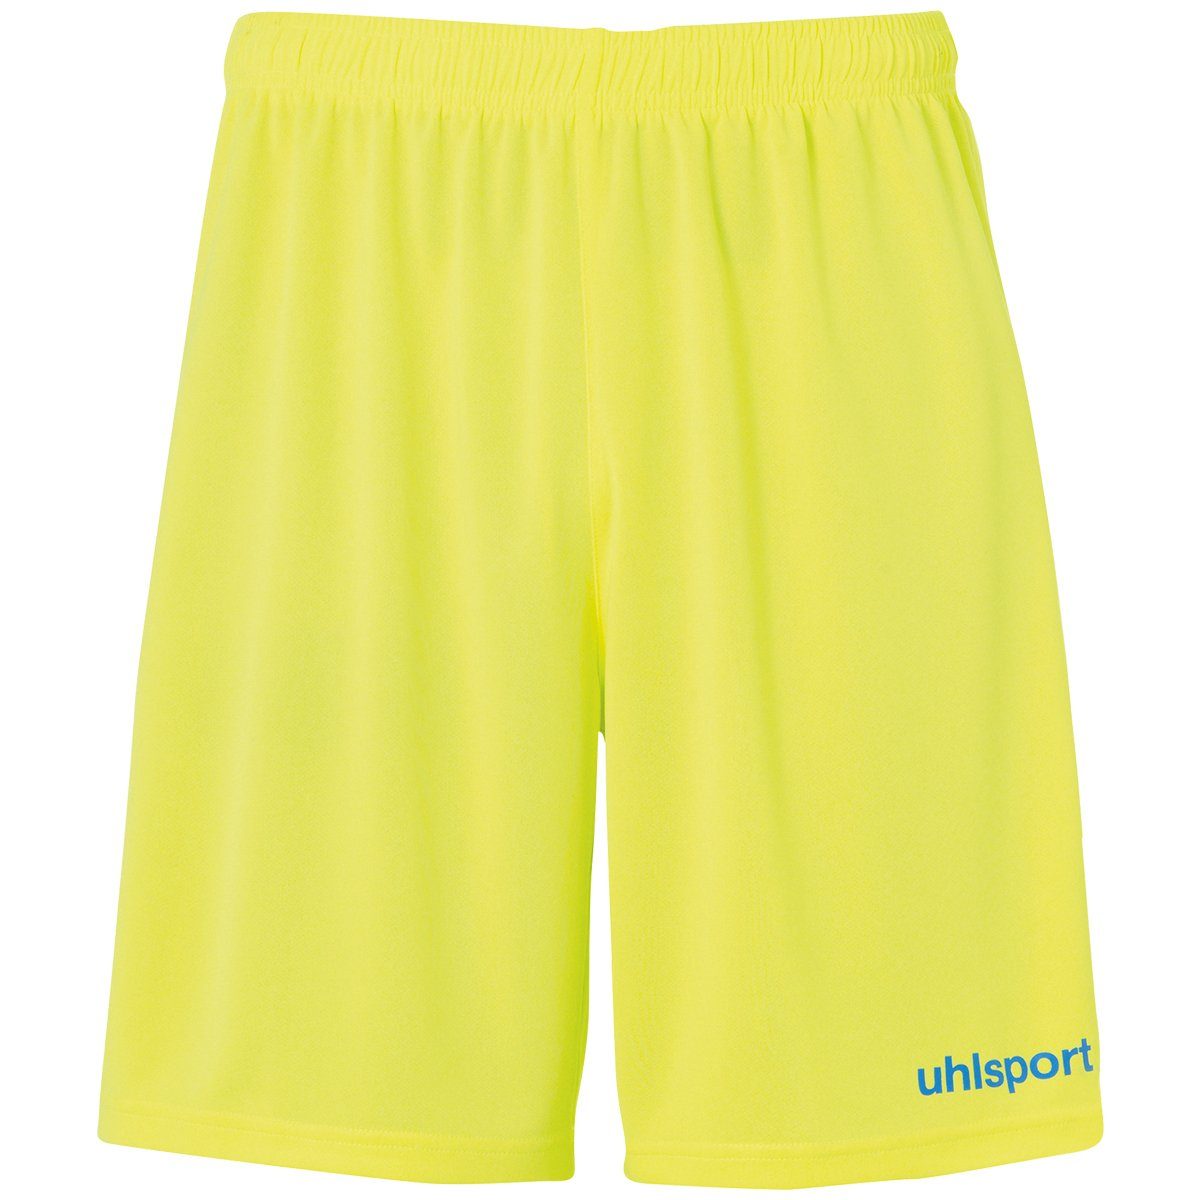 uhlsport Shorts fluo gelb/radar blau Shorts uhlsport